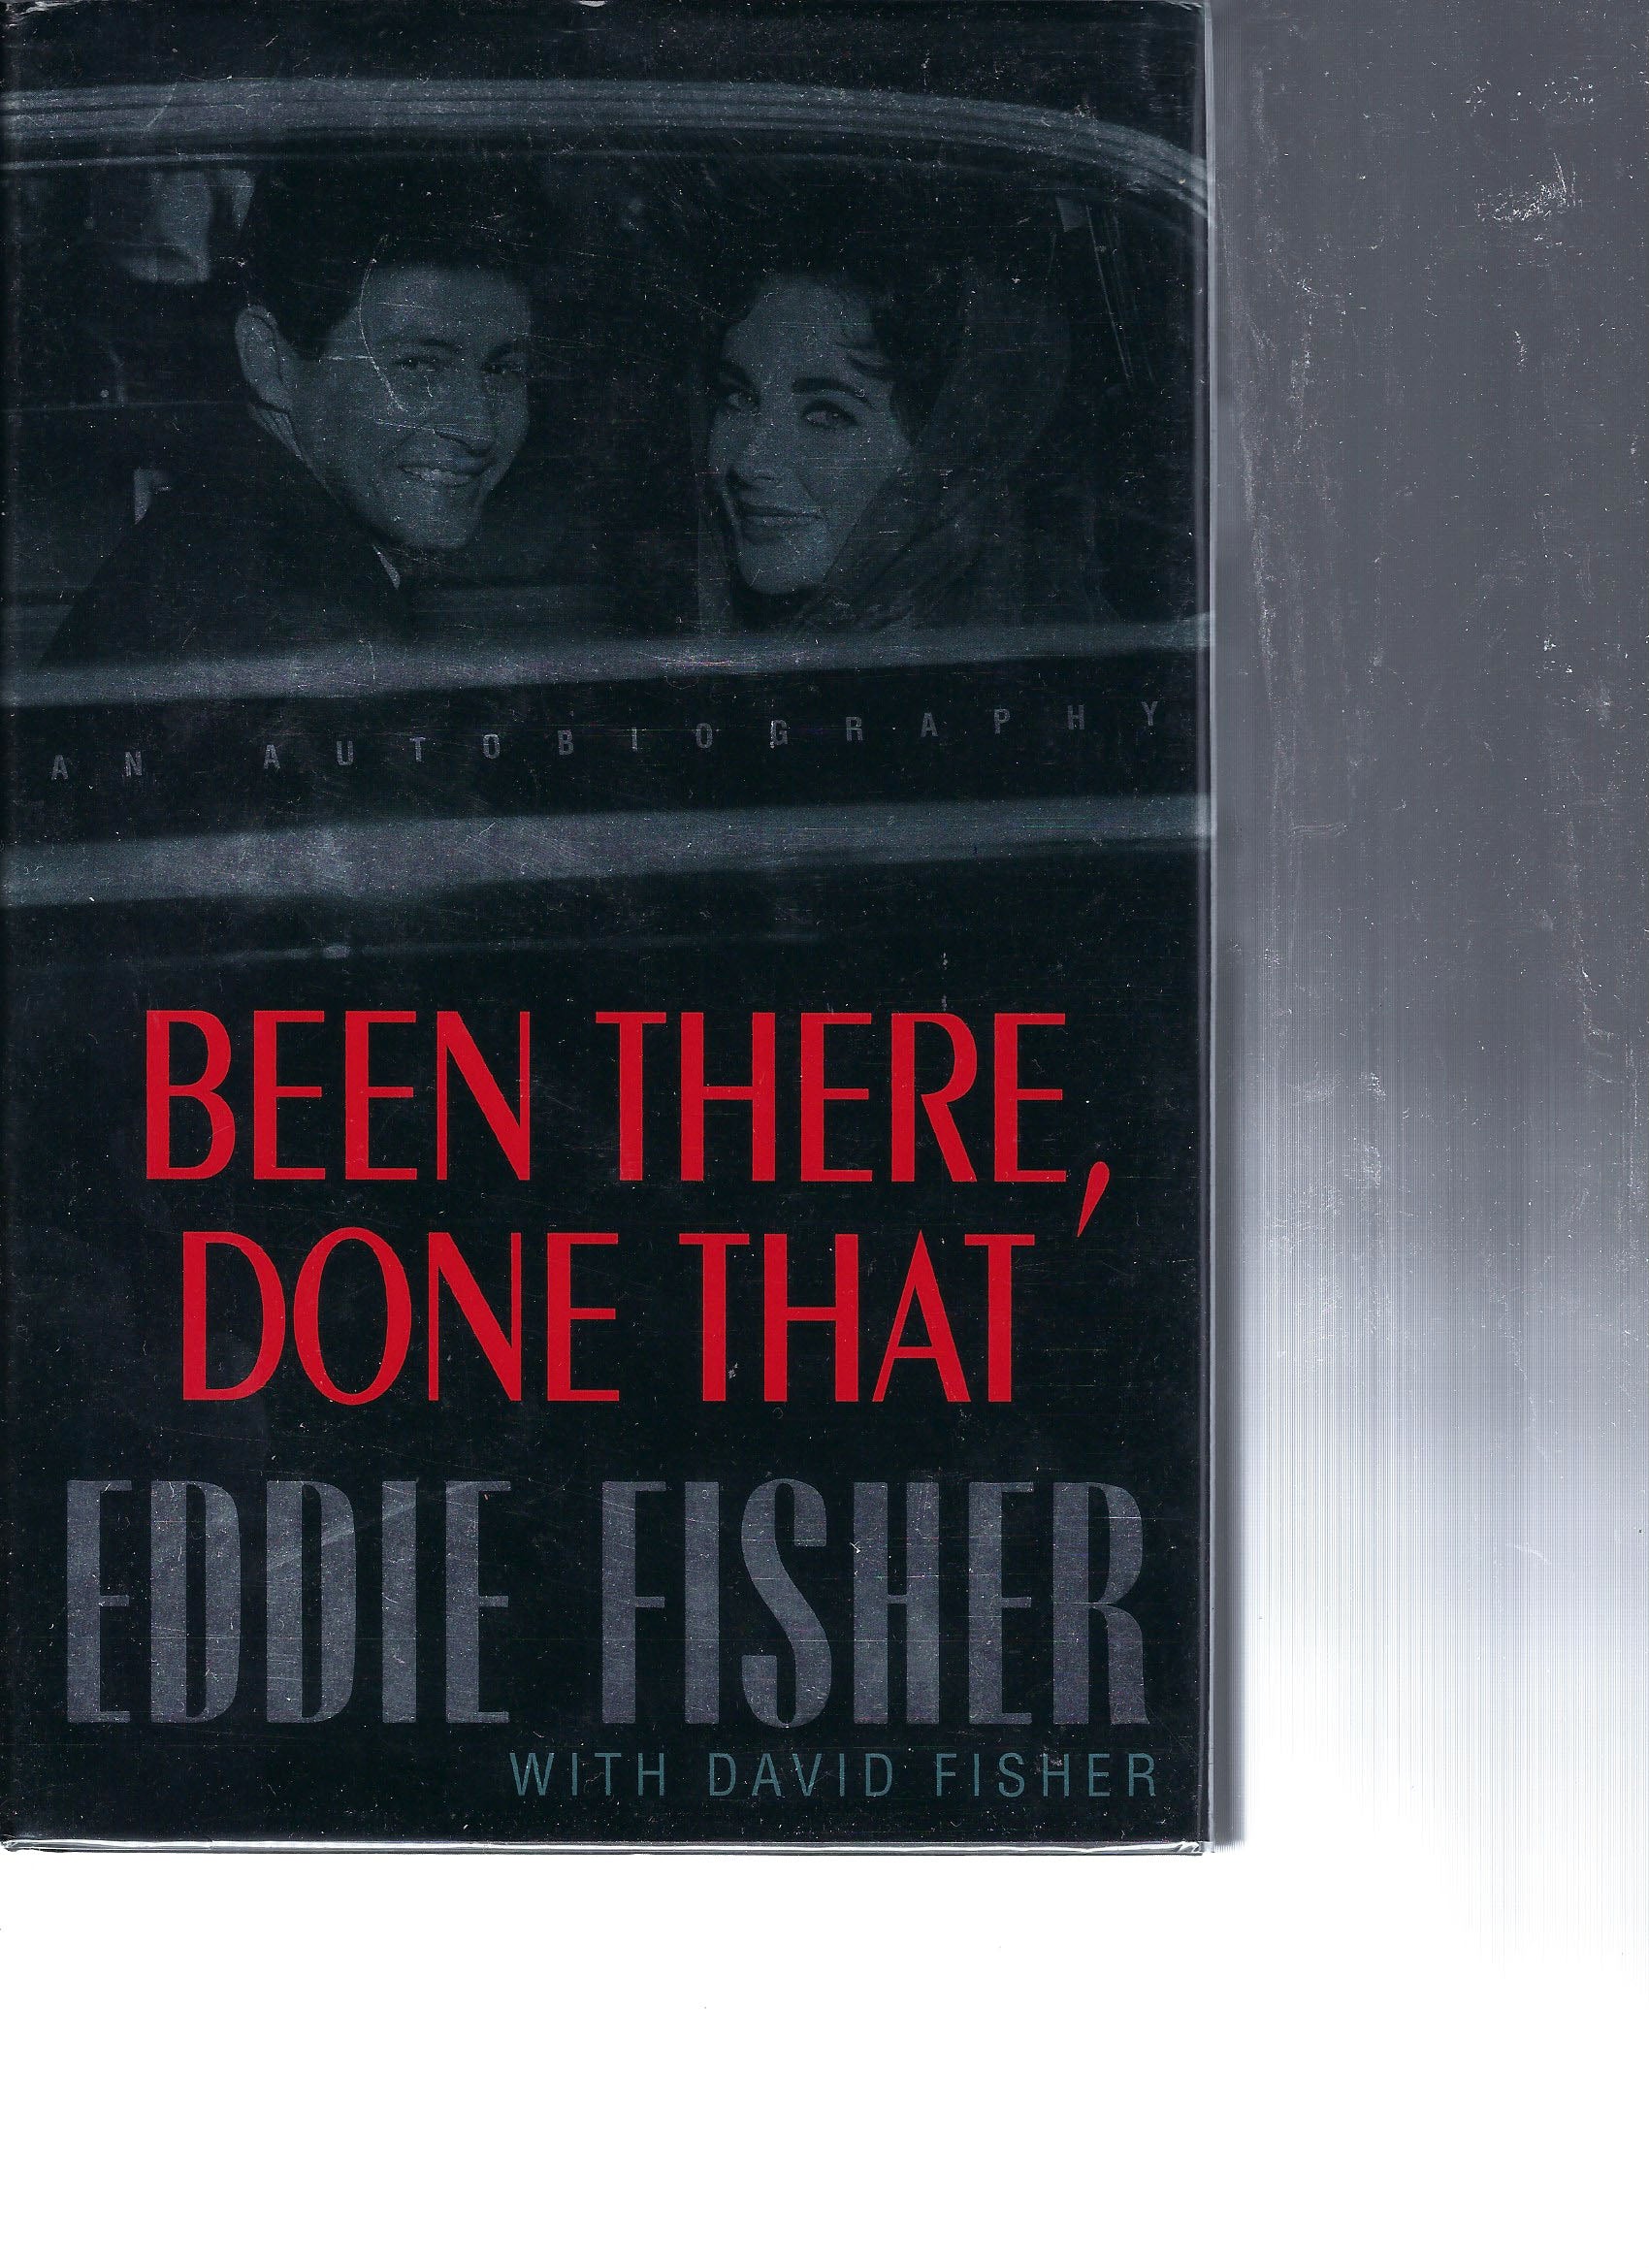 Eddie Fisher signed book